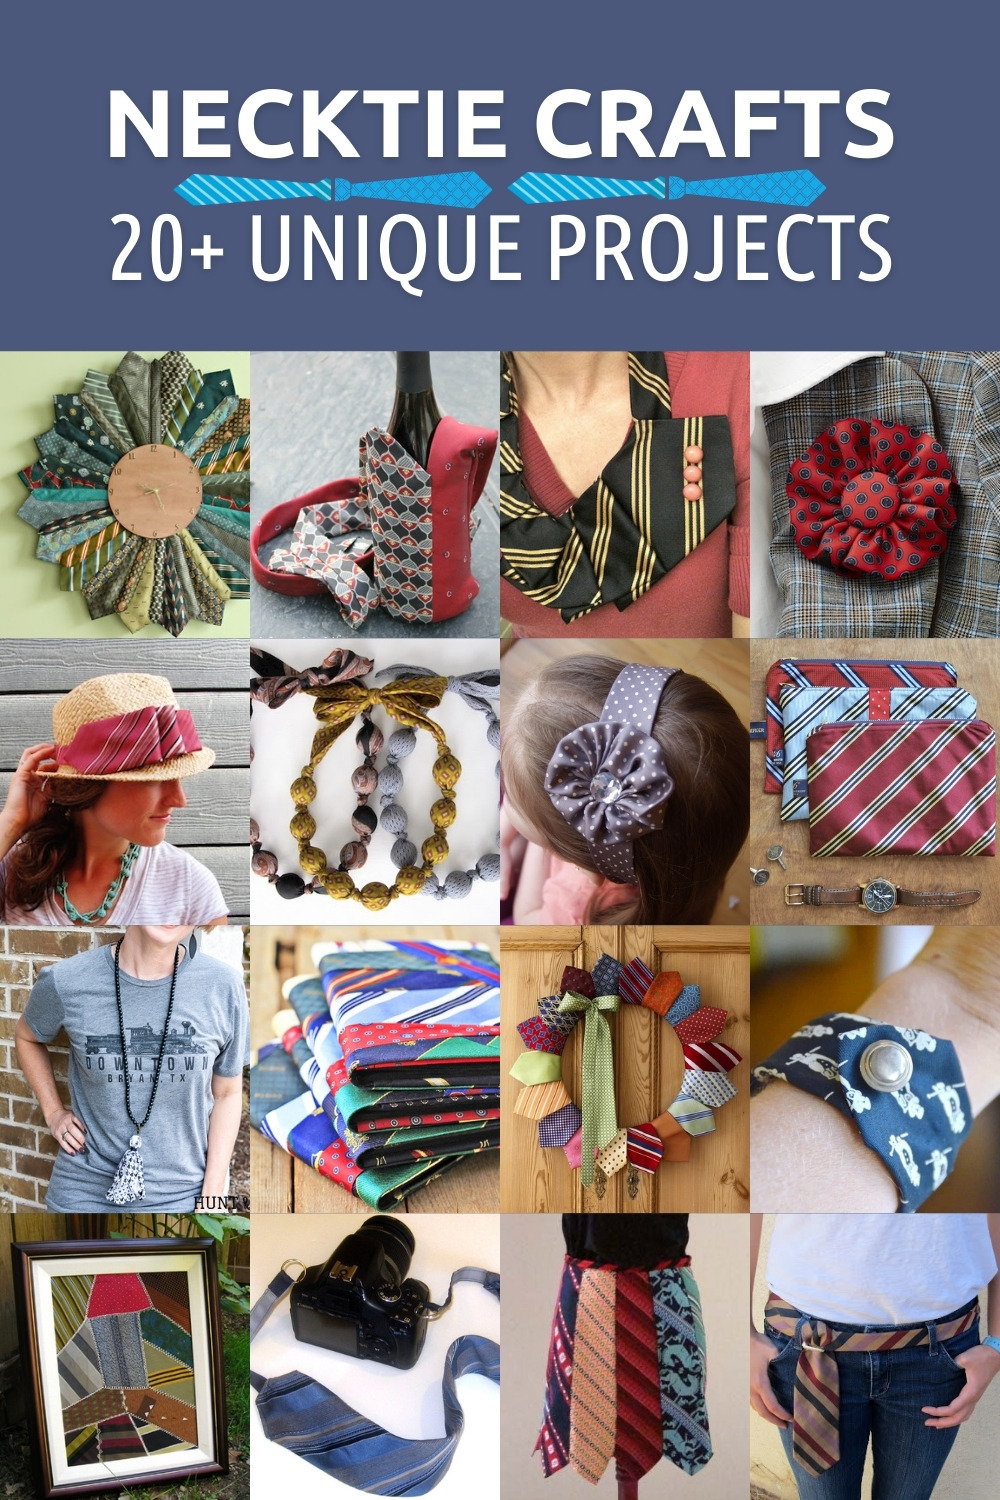 Over 20 Unique Necktie Crafts